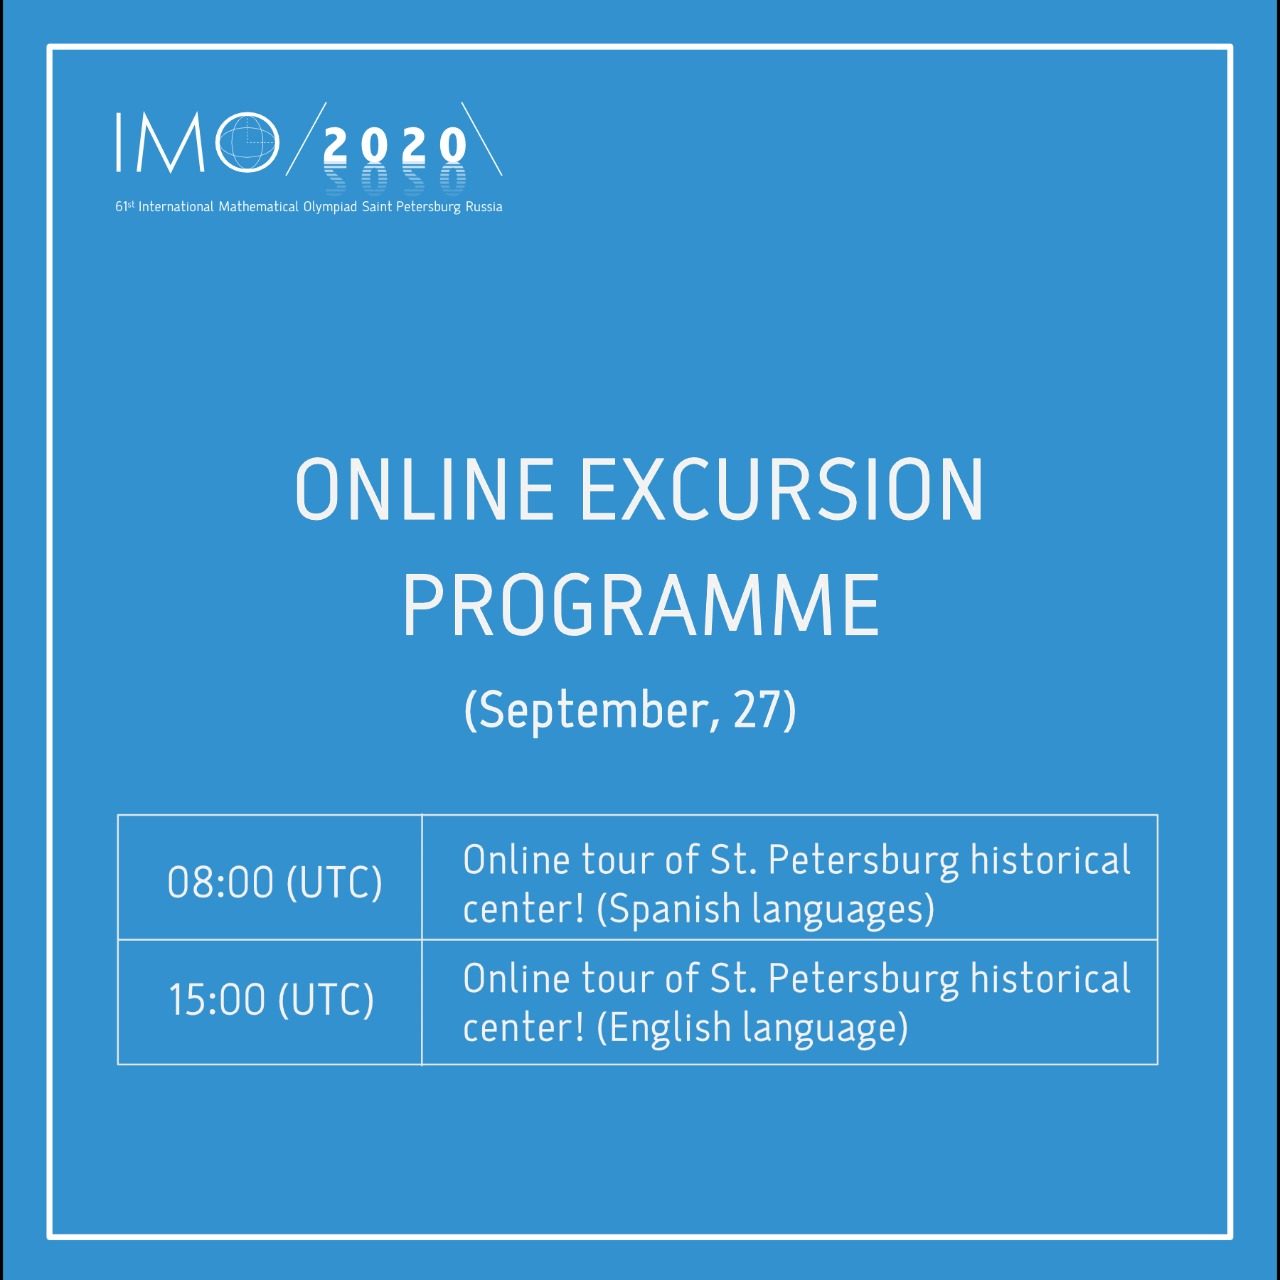 Online excursion programme